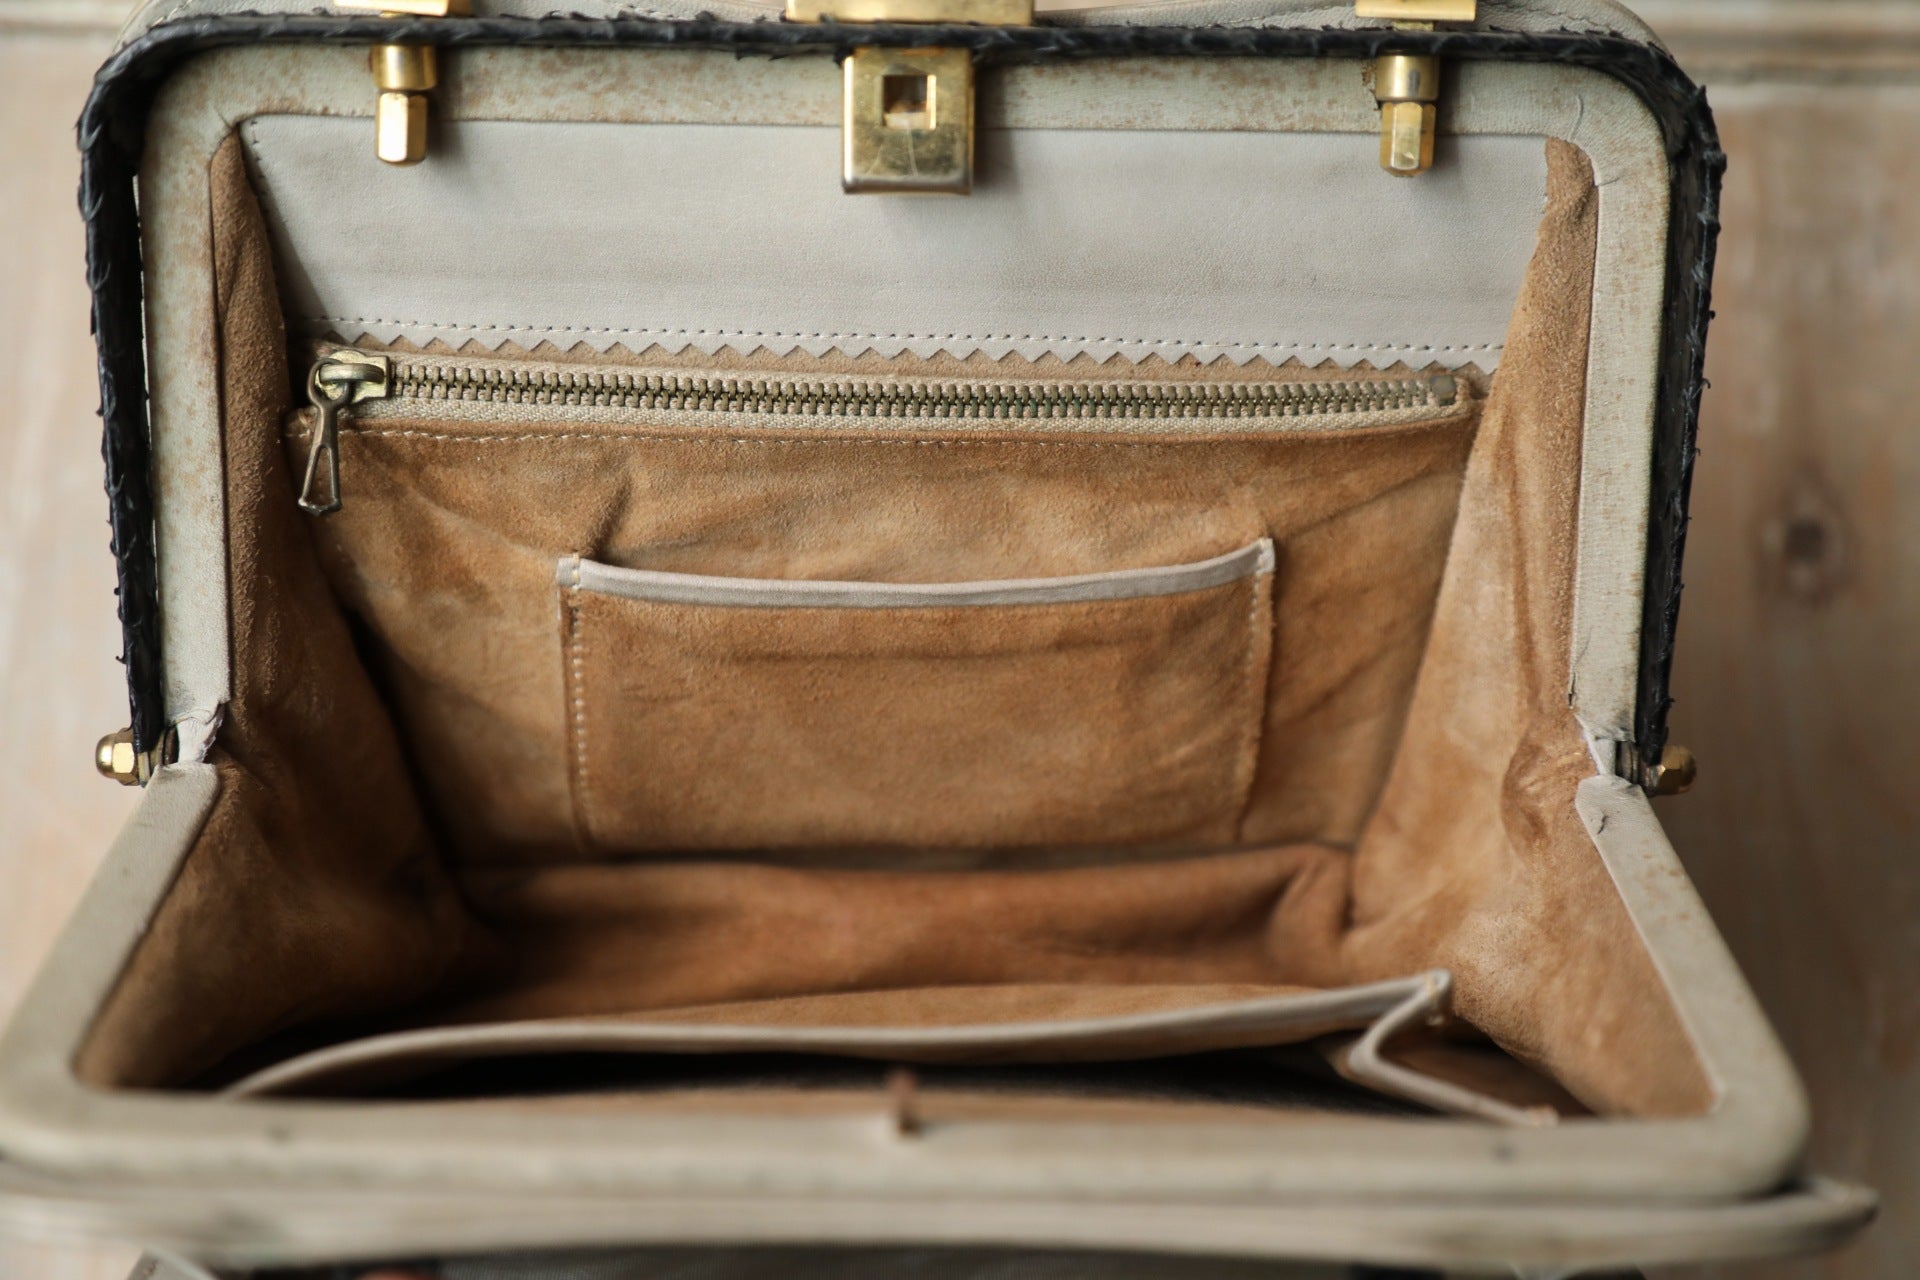 Vintage handbag, vintage bag, vintage 40s purse, 1940s classic, leather bag